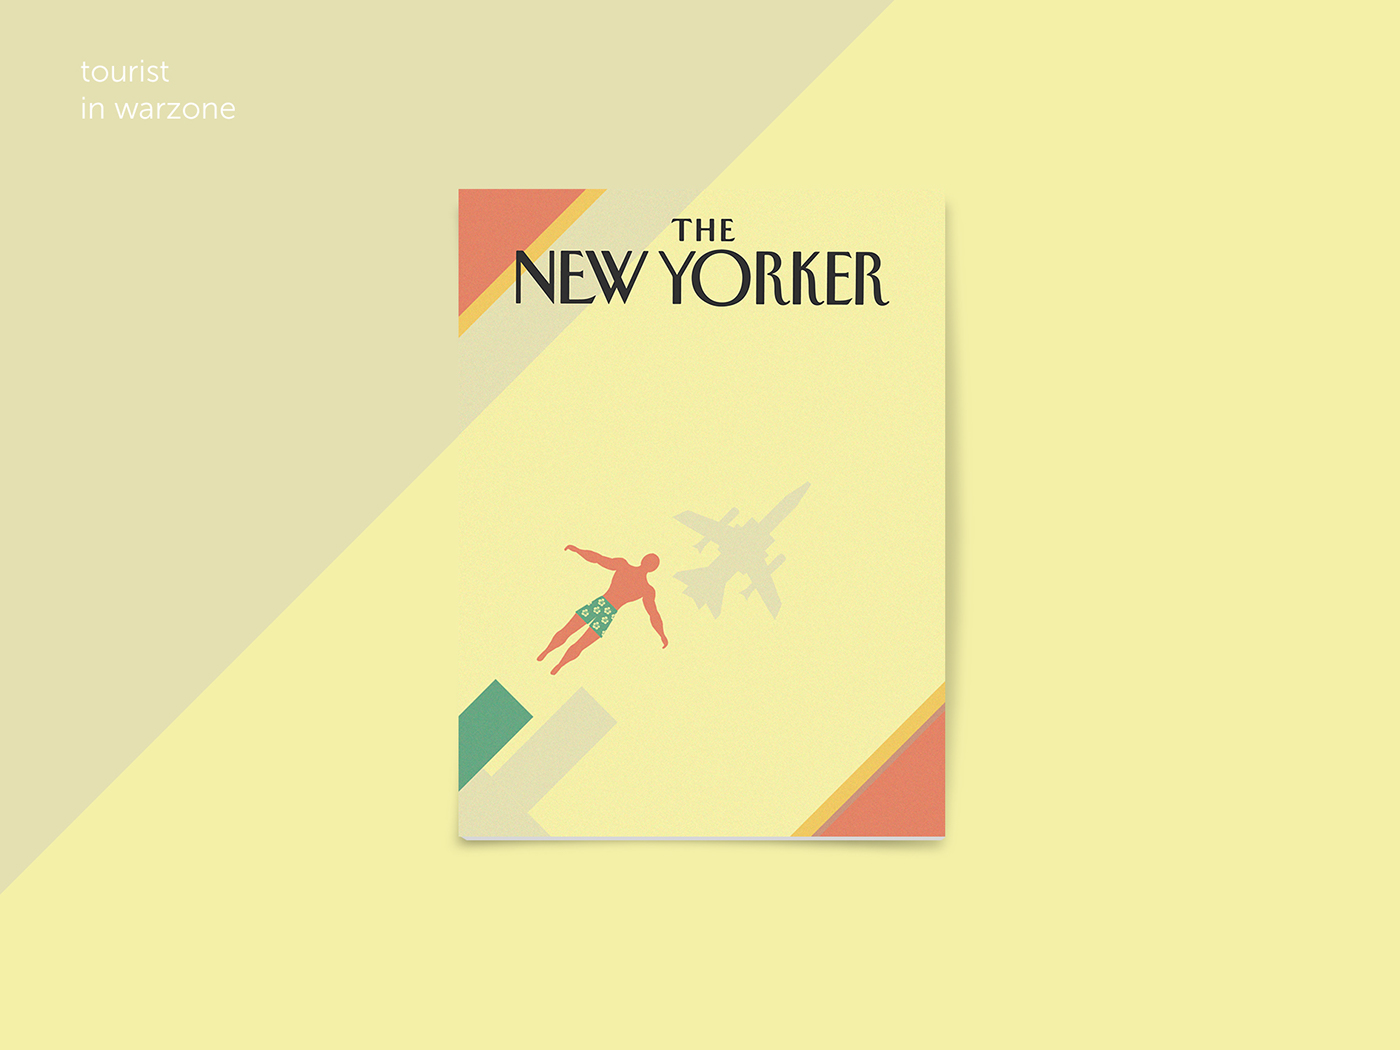 colors colurs The New Yorker magazine Magazine Cover magazine layout Magazine illustration illustration with meaning warzone wild animals wifi Internet